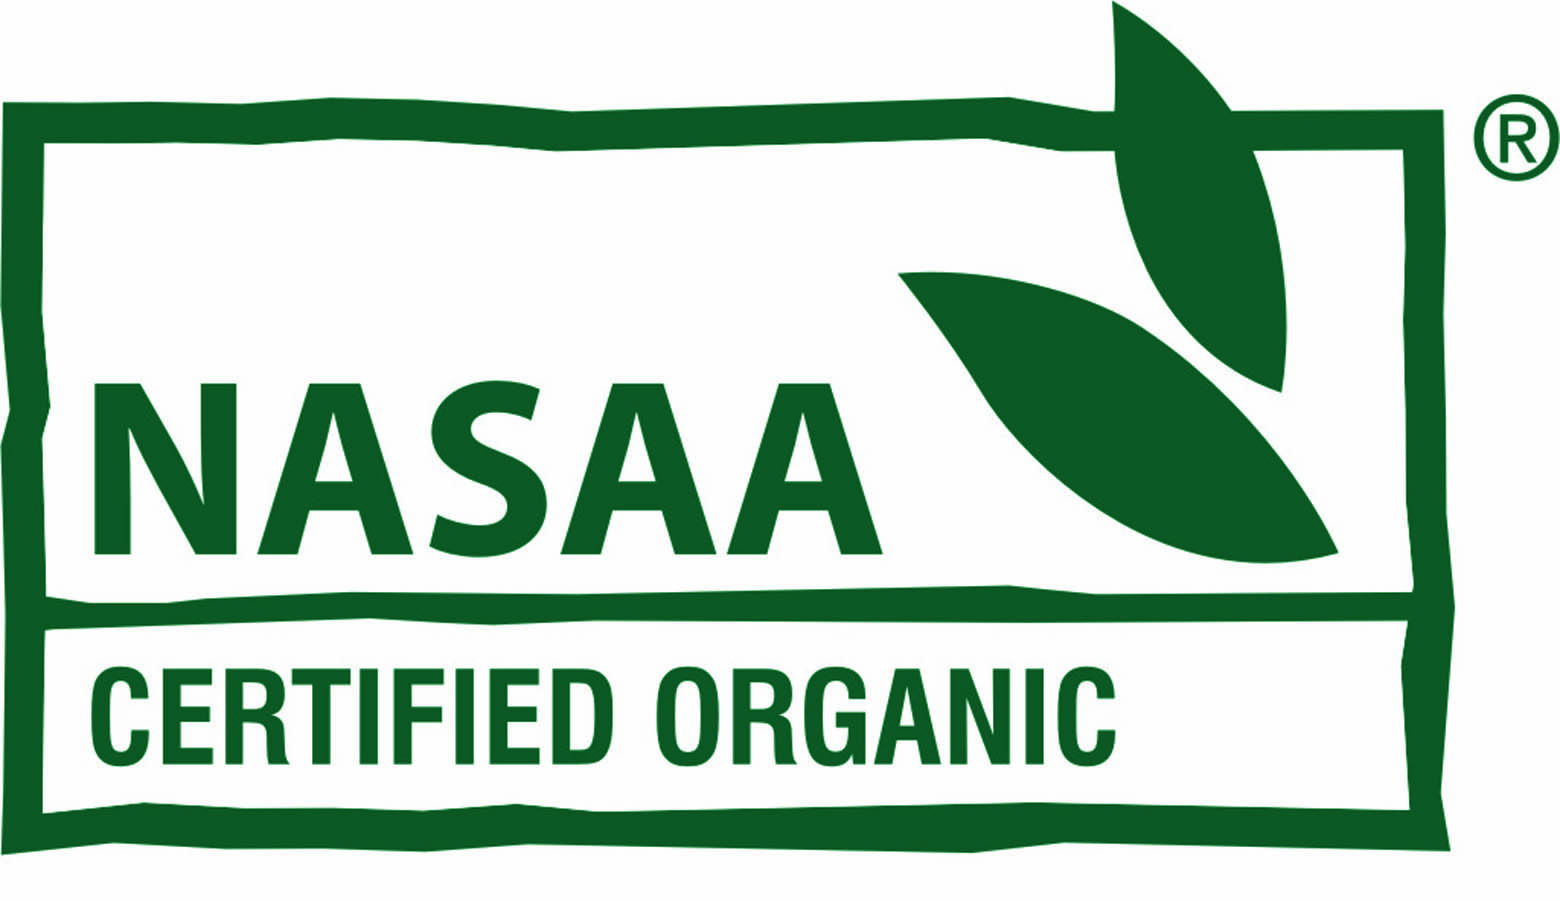 Nasaa Certified Organic Logo